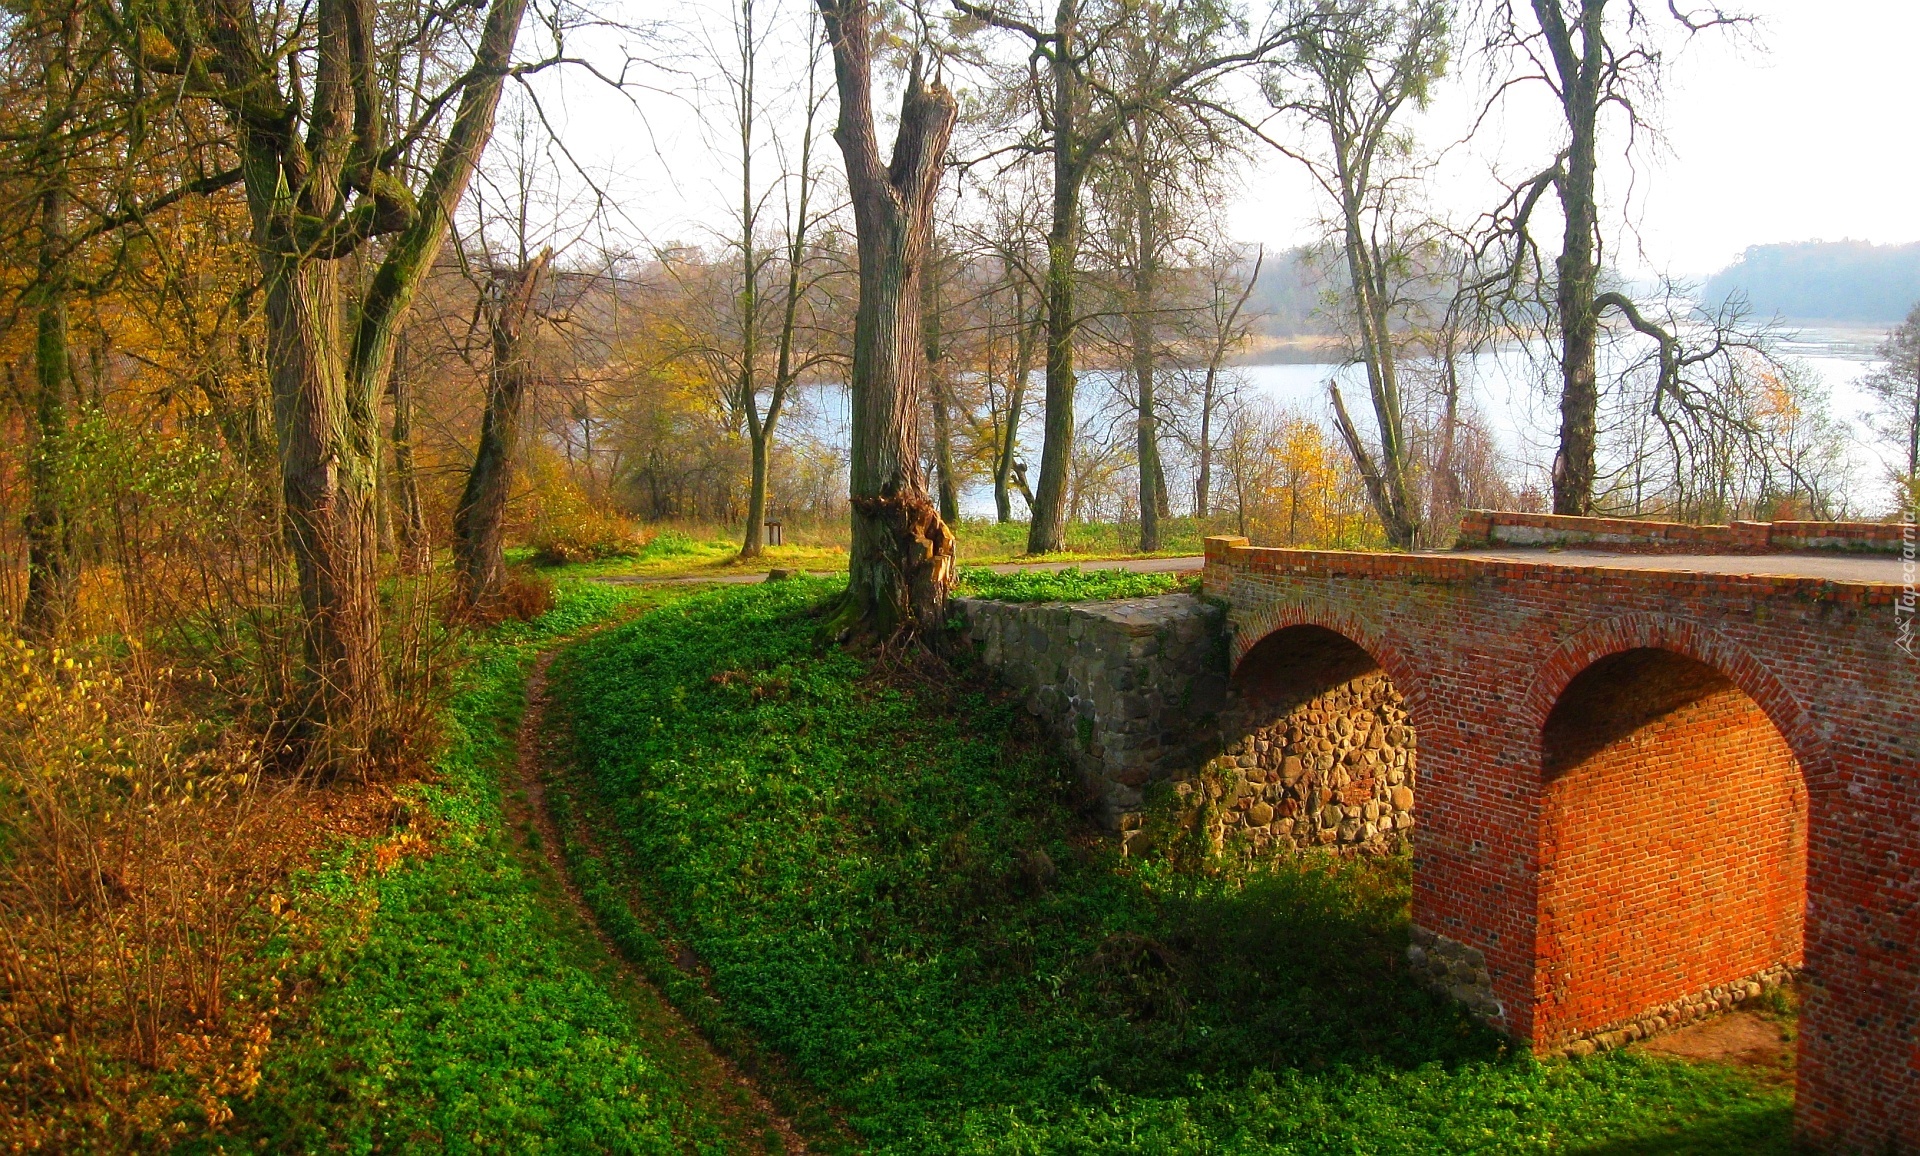 Most, Ruina, Jesień